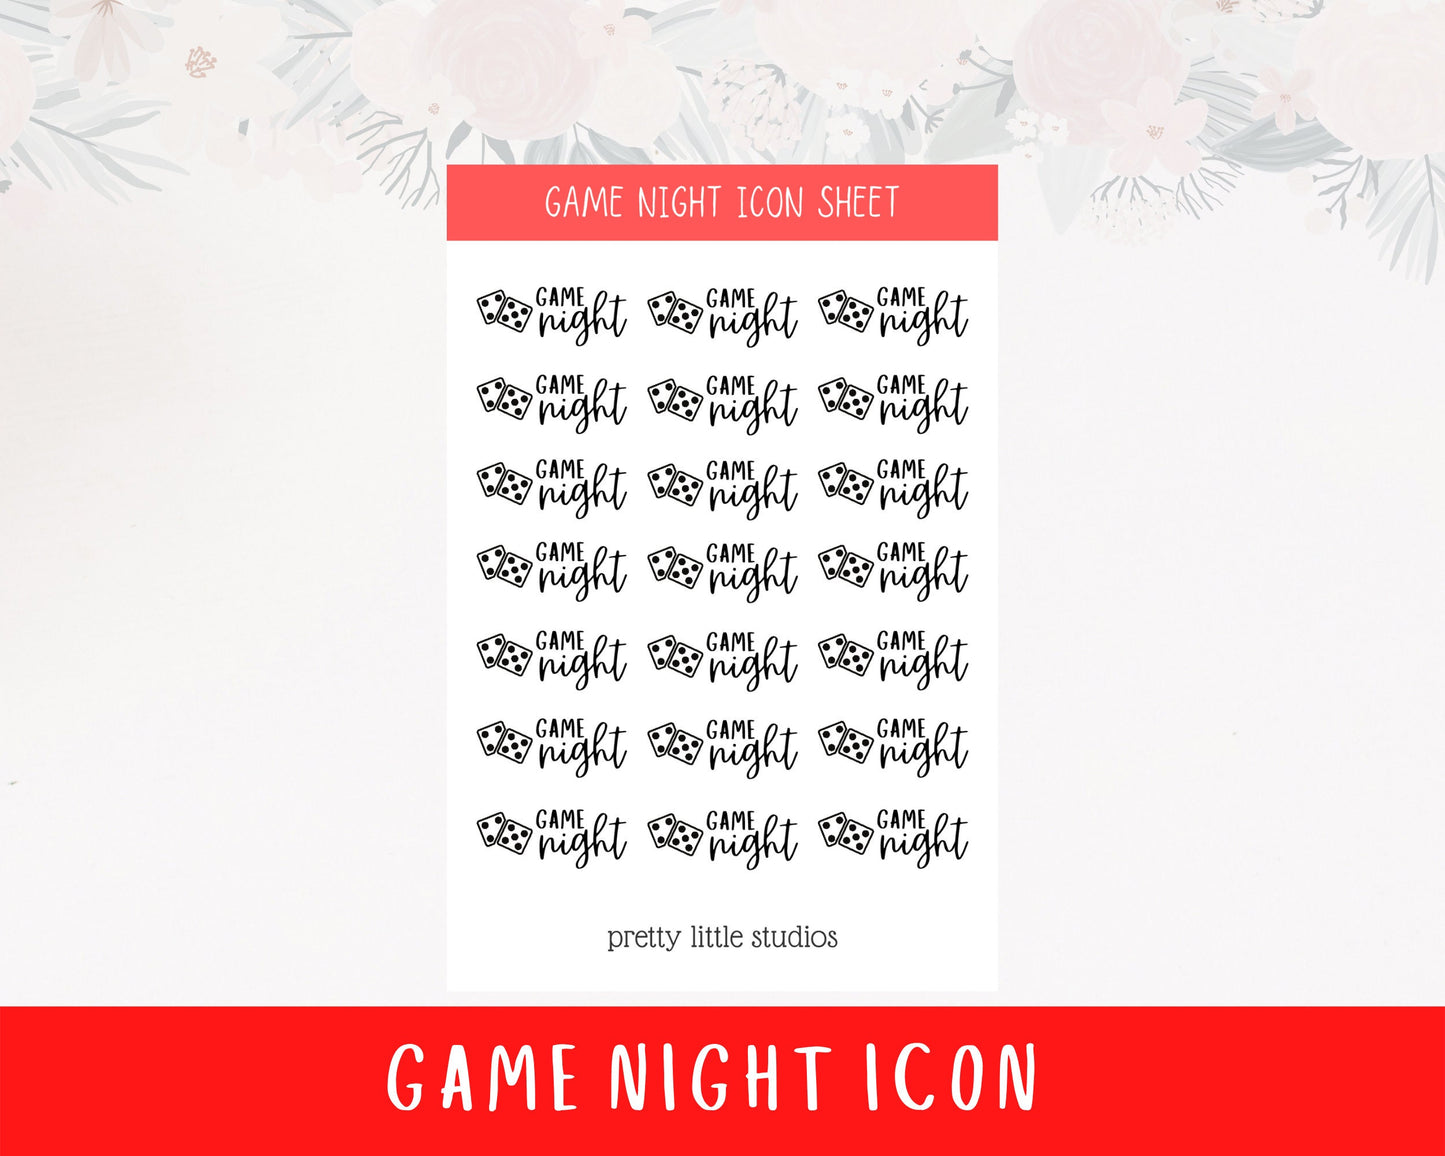 Game Night Icon Sticker Sheet - Bullet Journal Stickers - Planner Stickers - Game Night Stickers - Functional Stickers - Icon Stickers